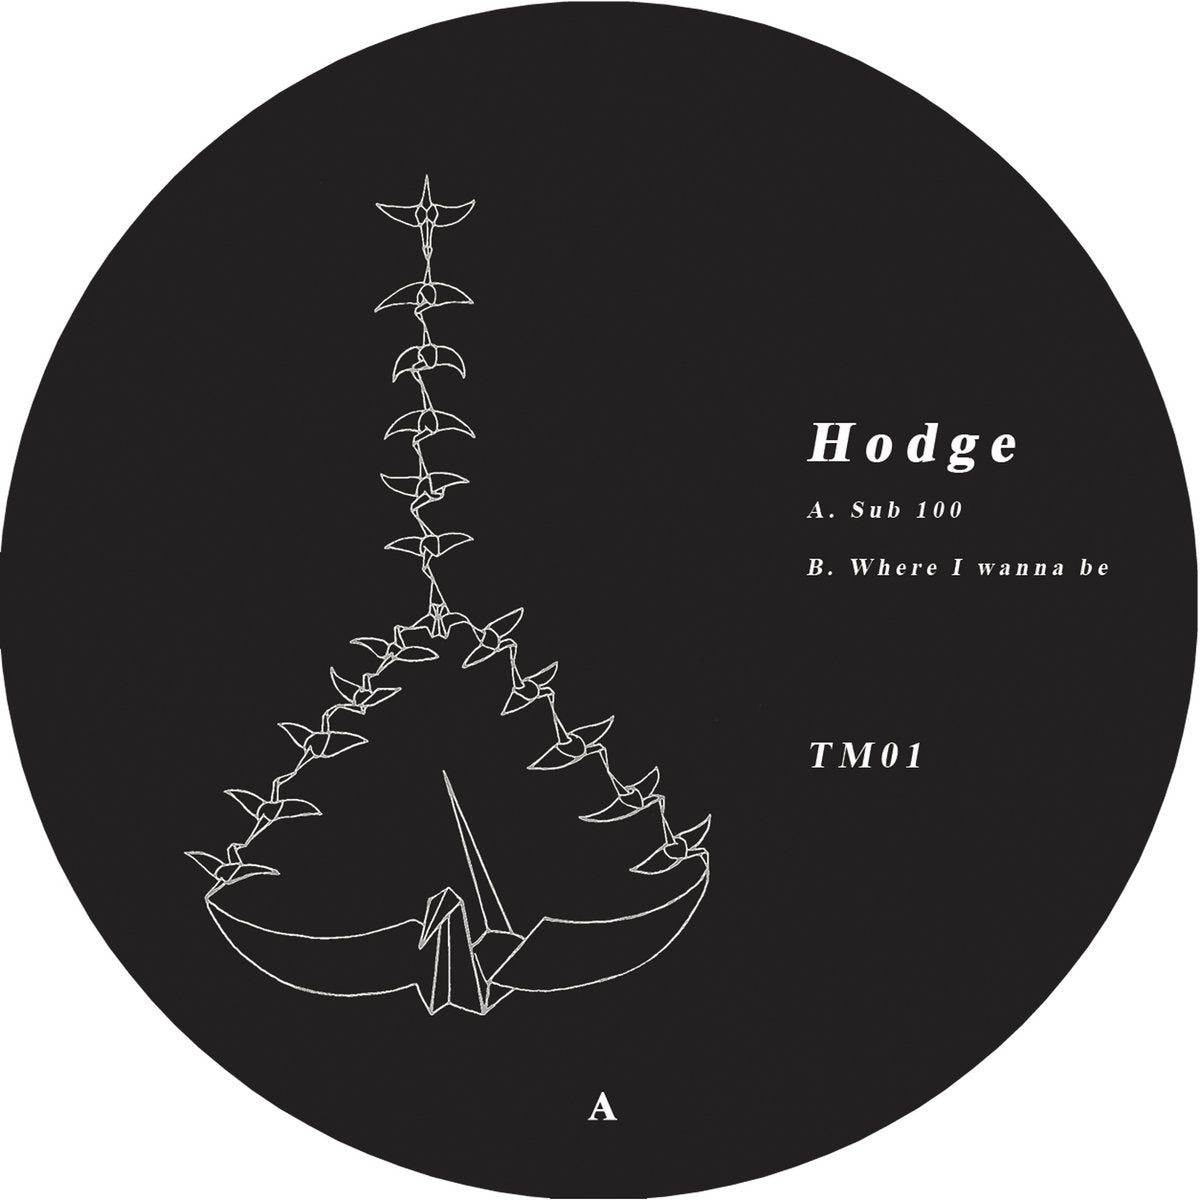 Hodge – Sub 100